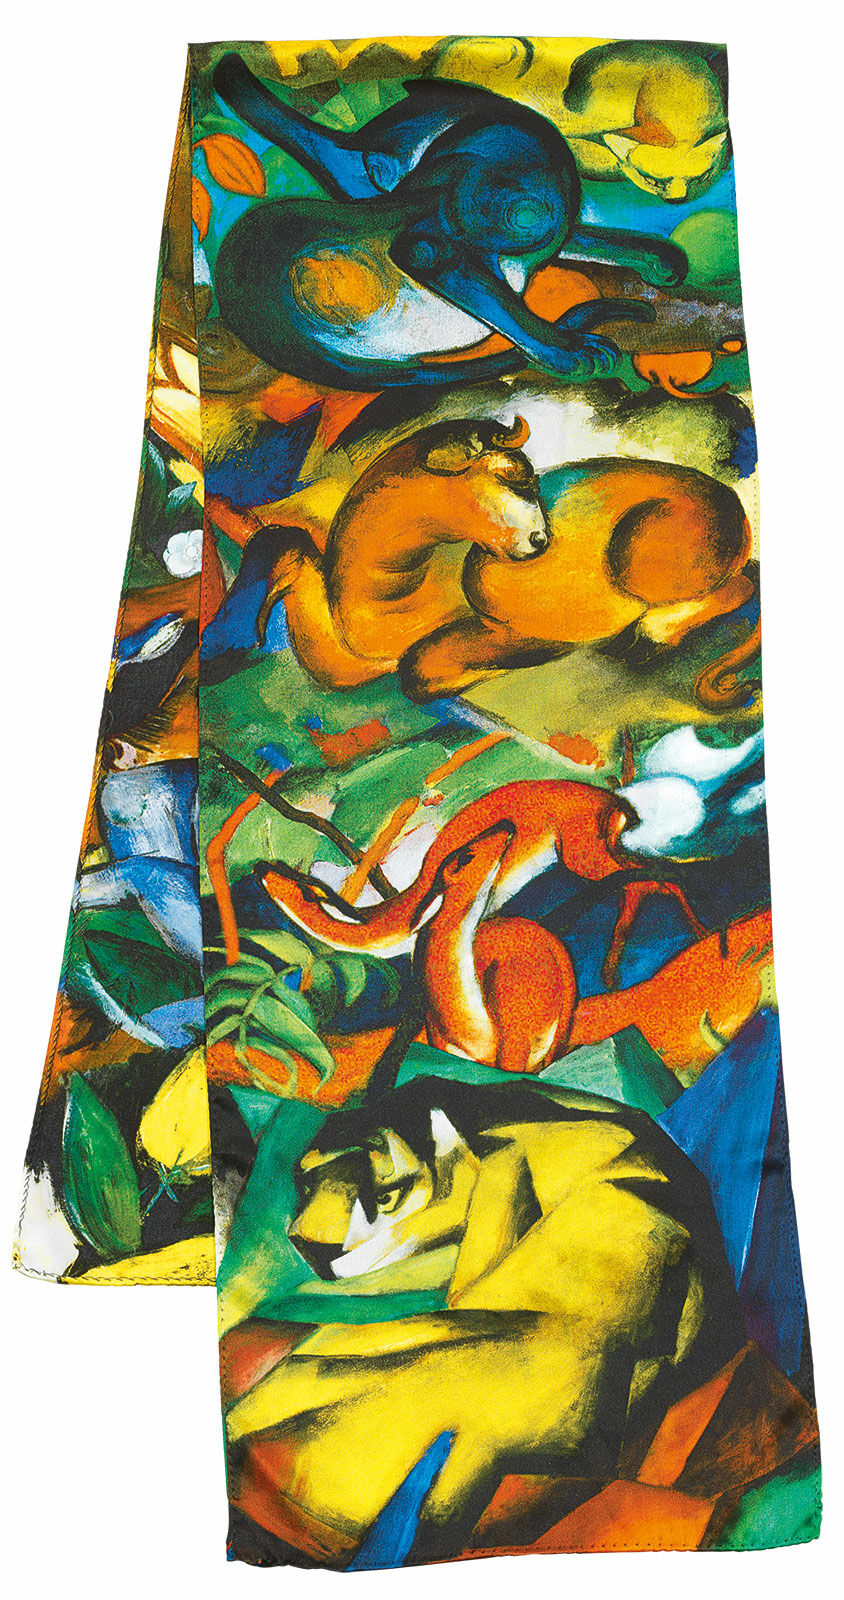 Silk scarf "Homage to Franz Marc" by Franz Marc